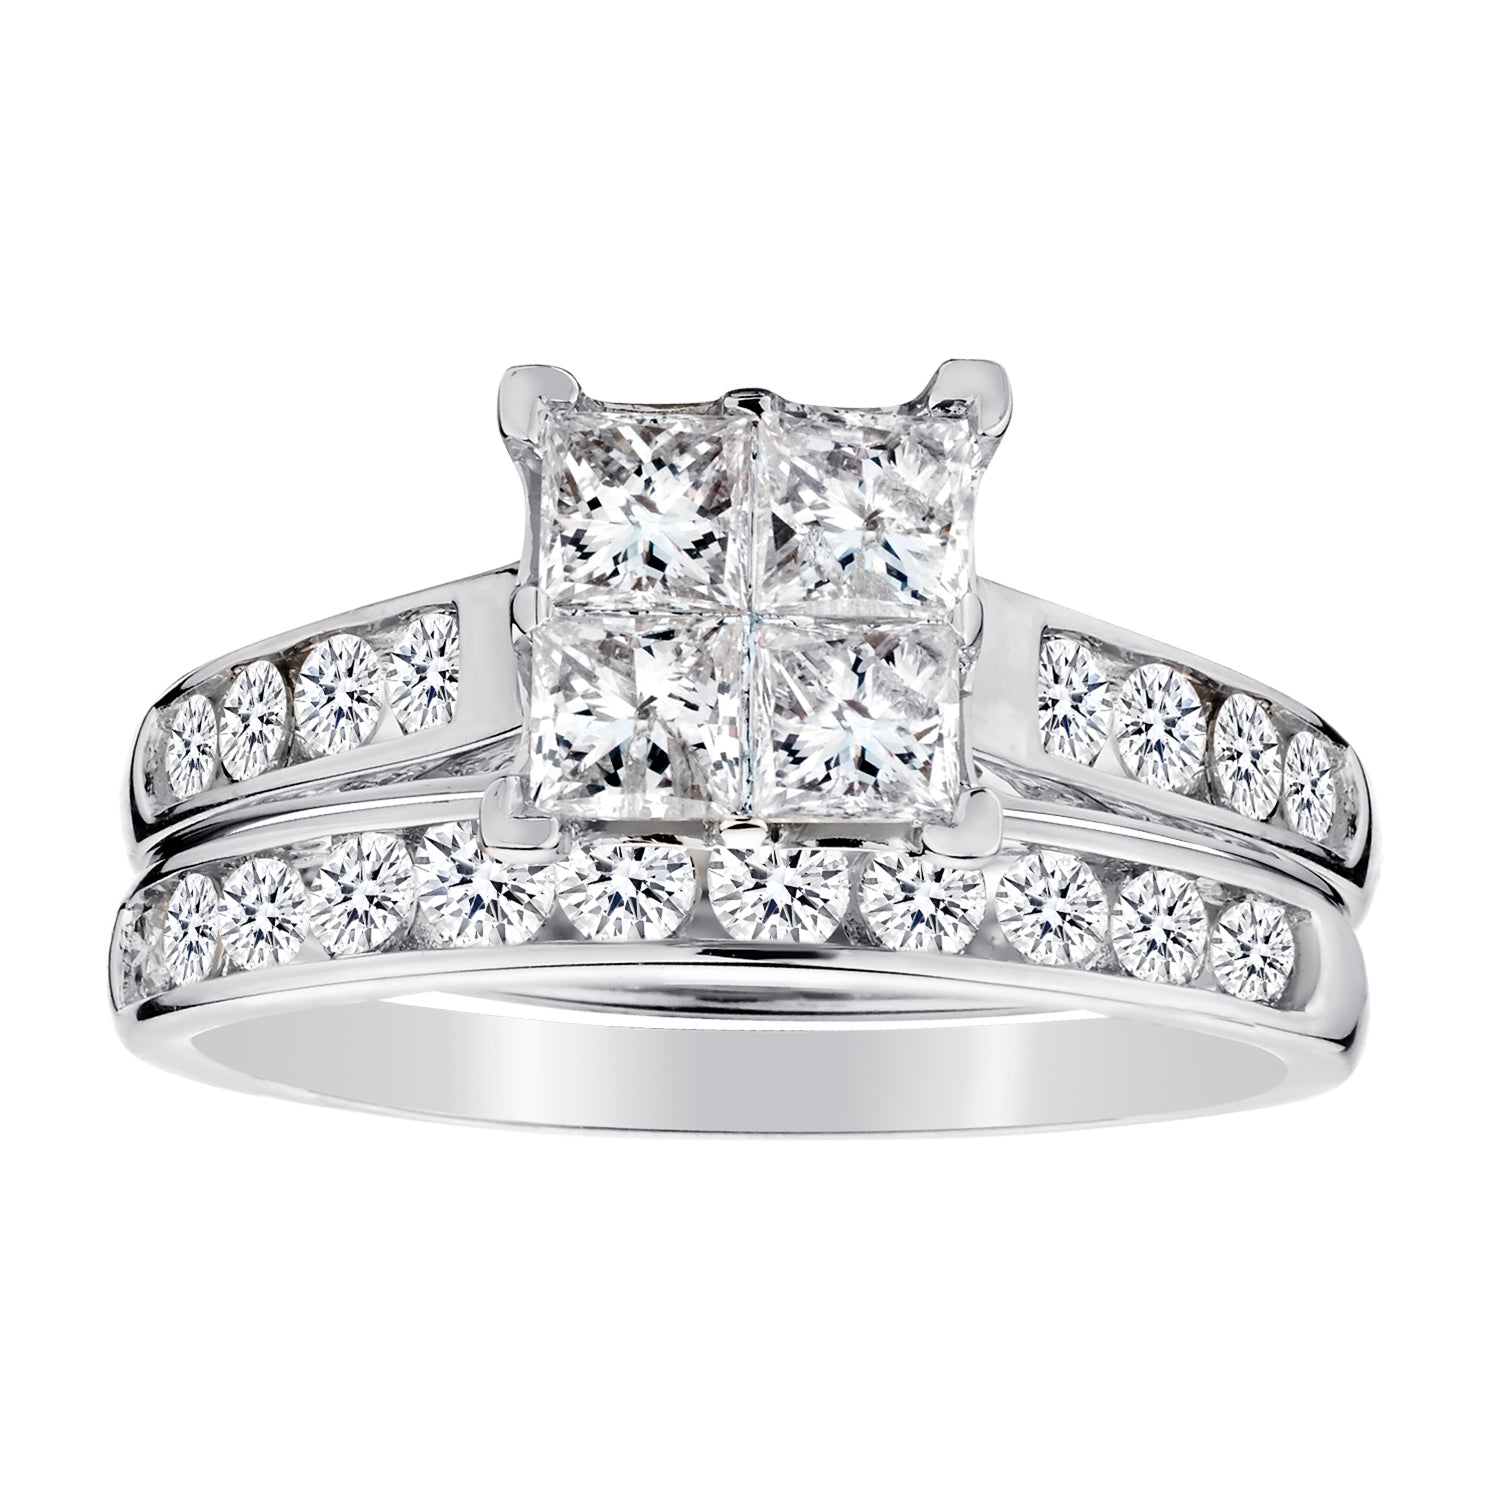 1.50 Carat Princess Design Diamond Engagement Ring Set, 14kt White Gold.......................NOW